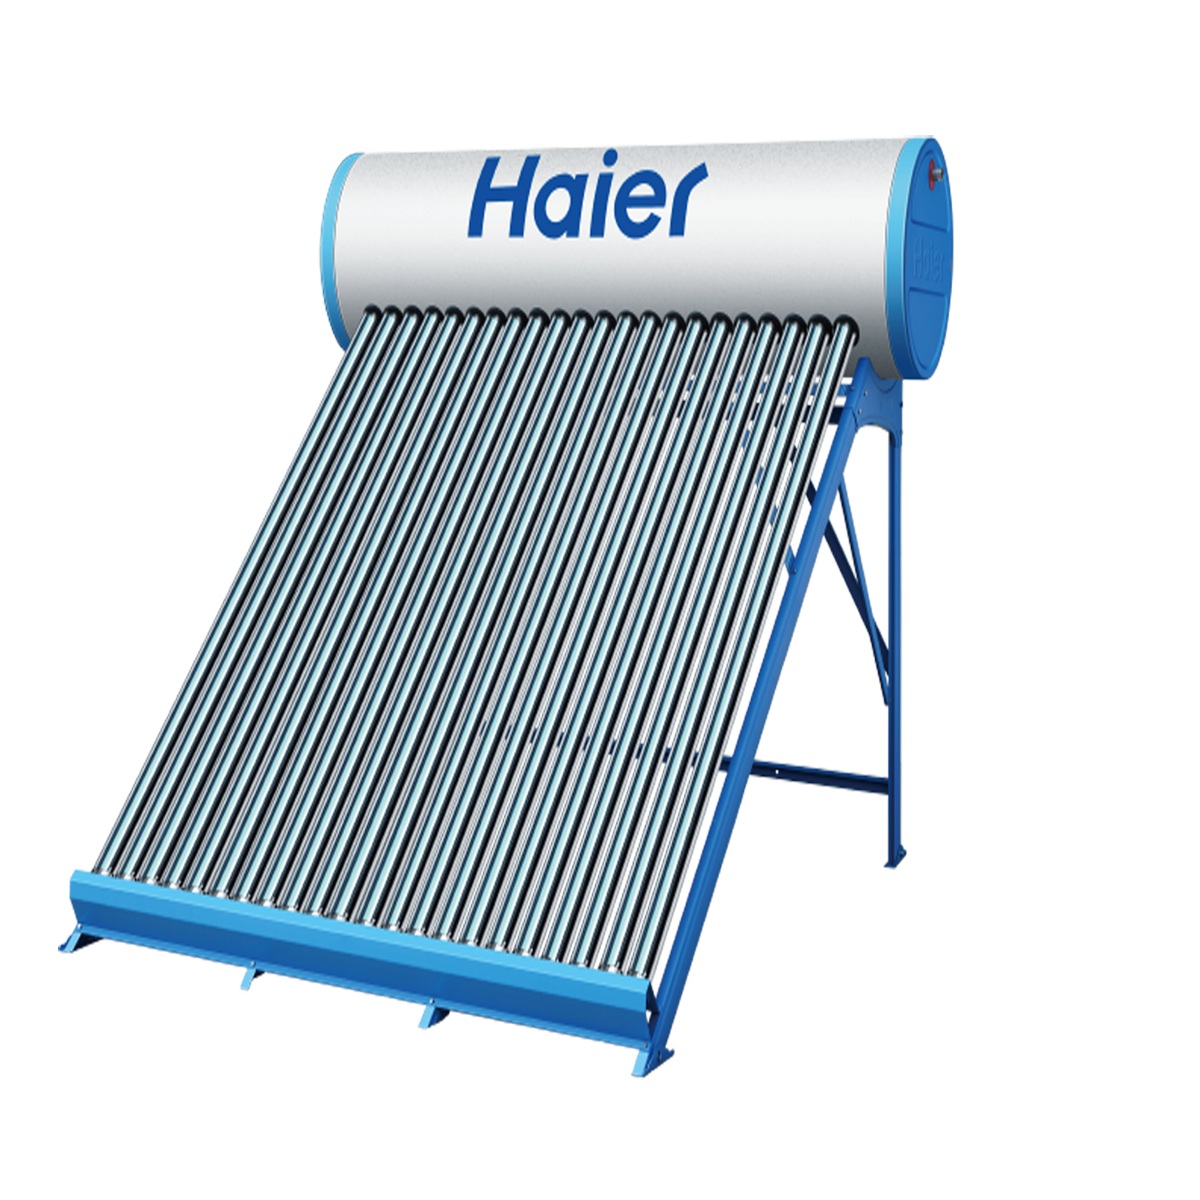 Haier Solar Water Heater User Manual